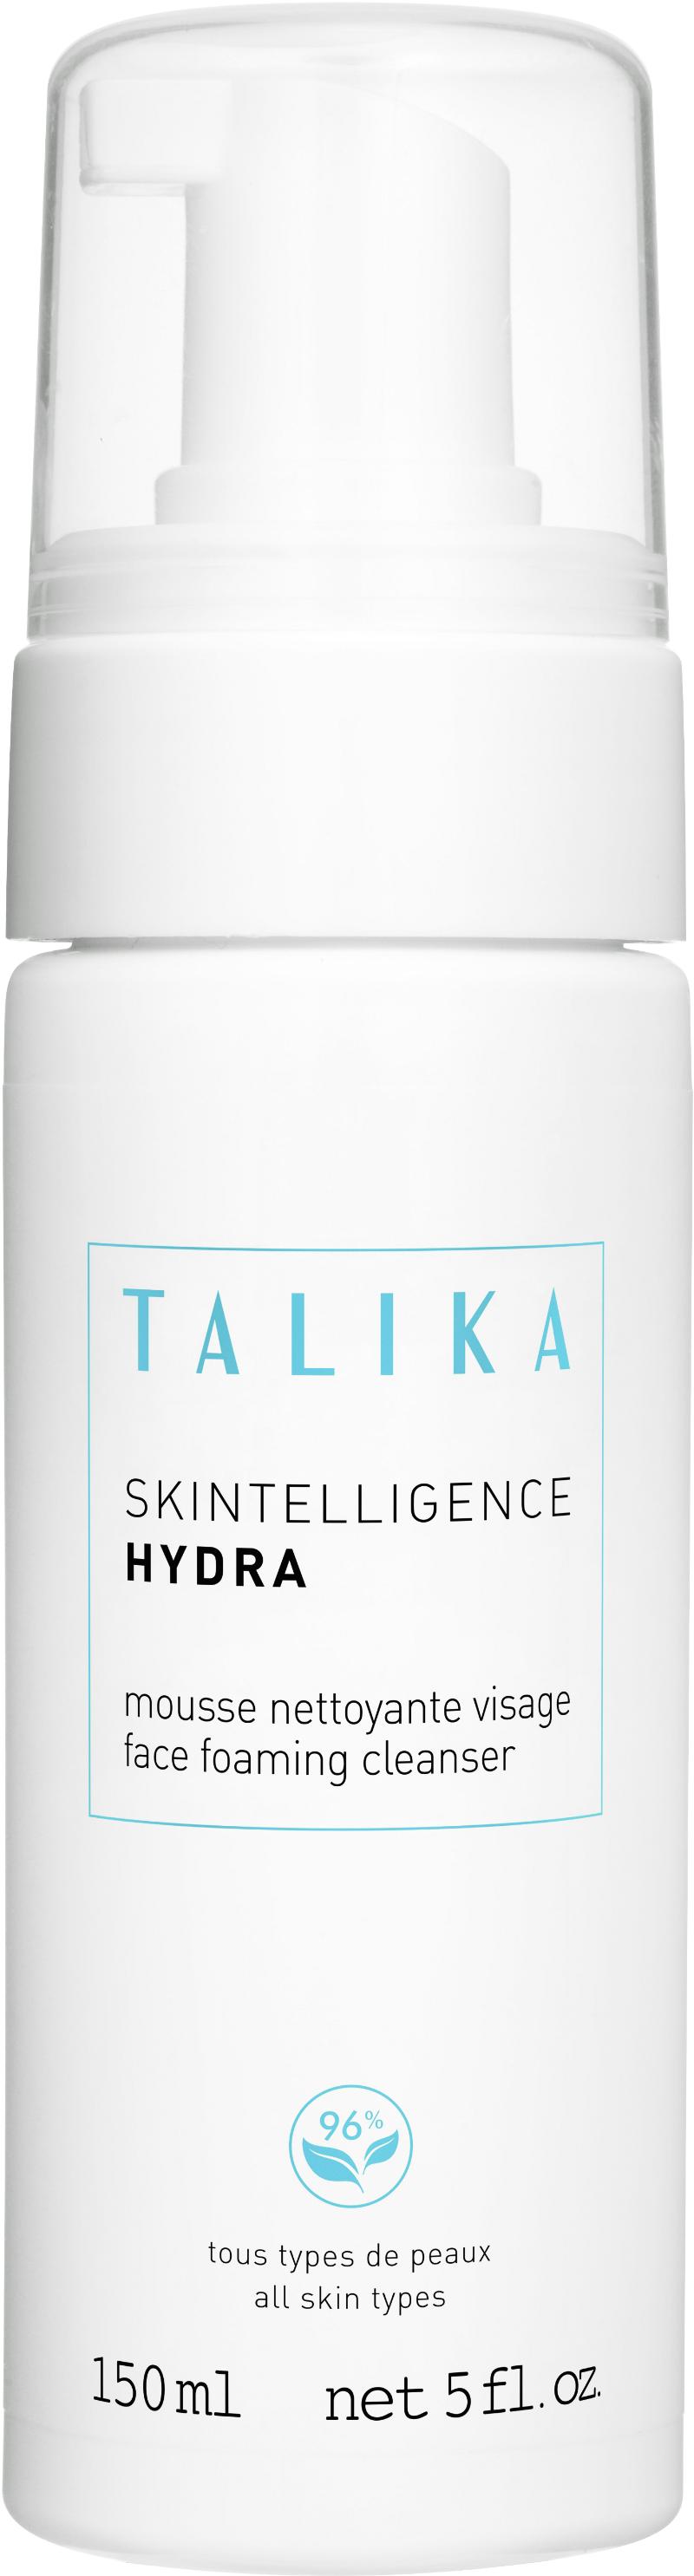 Talika Photo-Hydra Day Cream